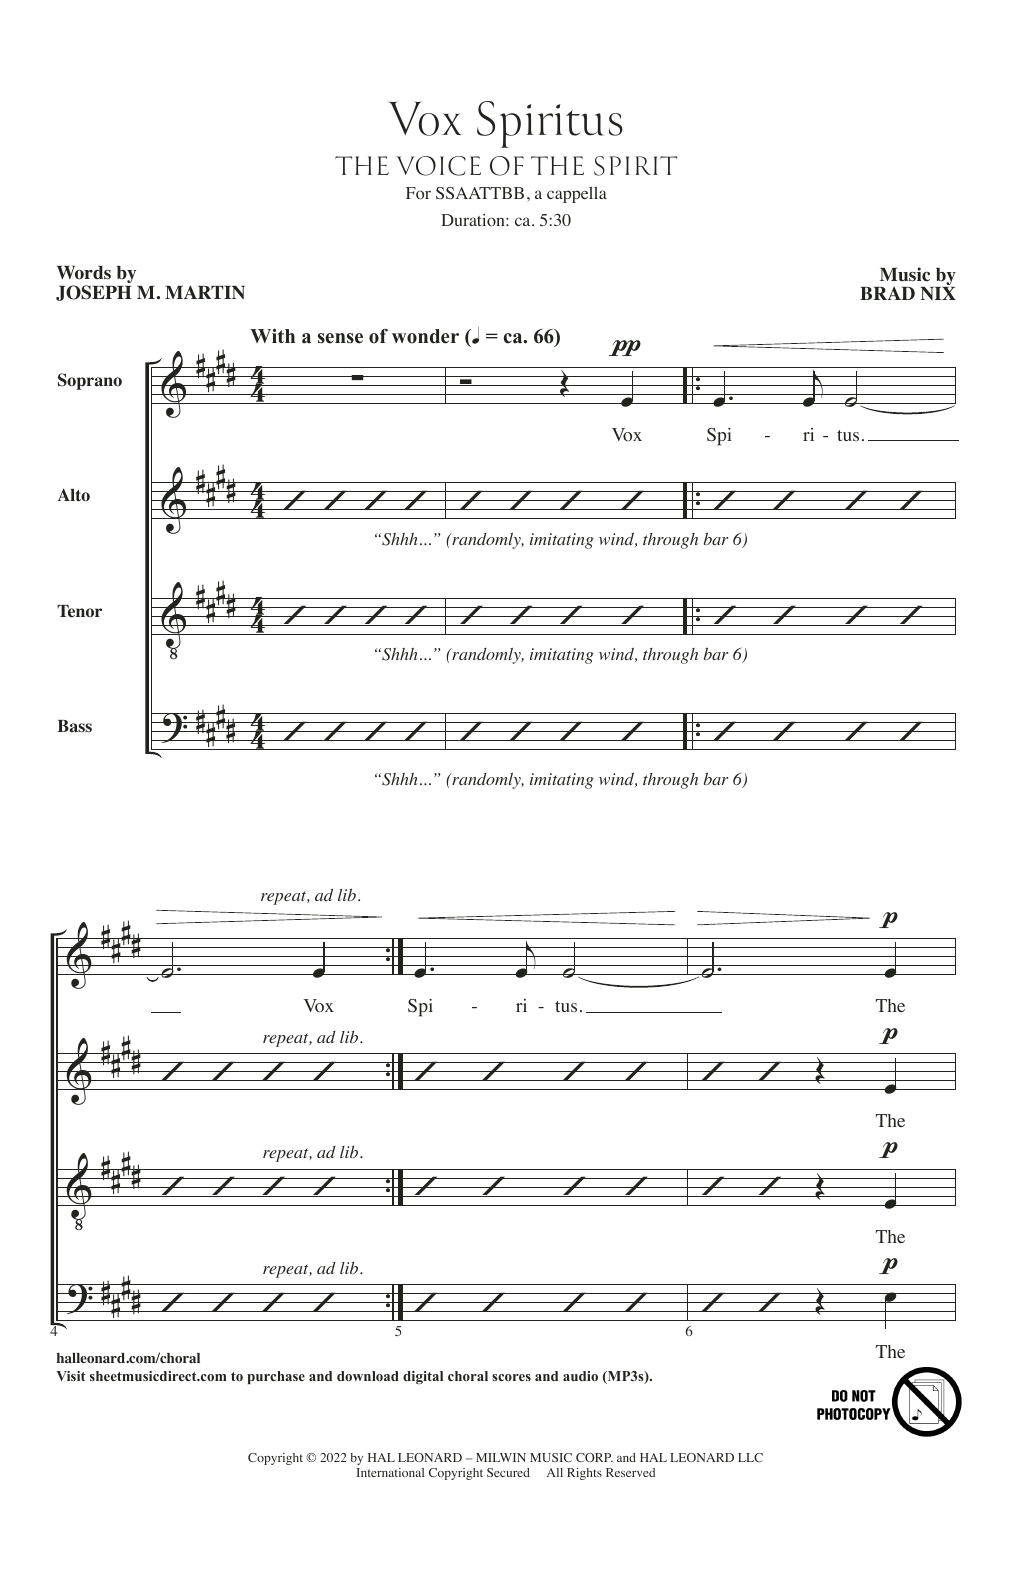 Joseph M. Martin and Brad Nix Vox Spiritus (The Voice Of The Spirit) sheet music notes and chords arranged for SATB Choir